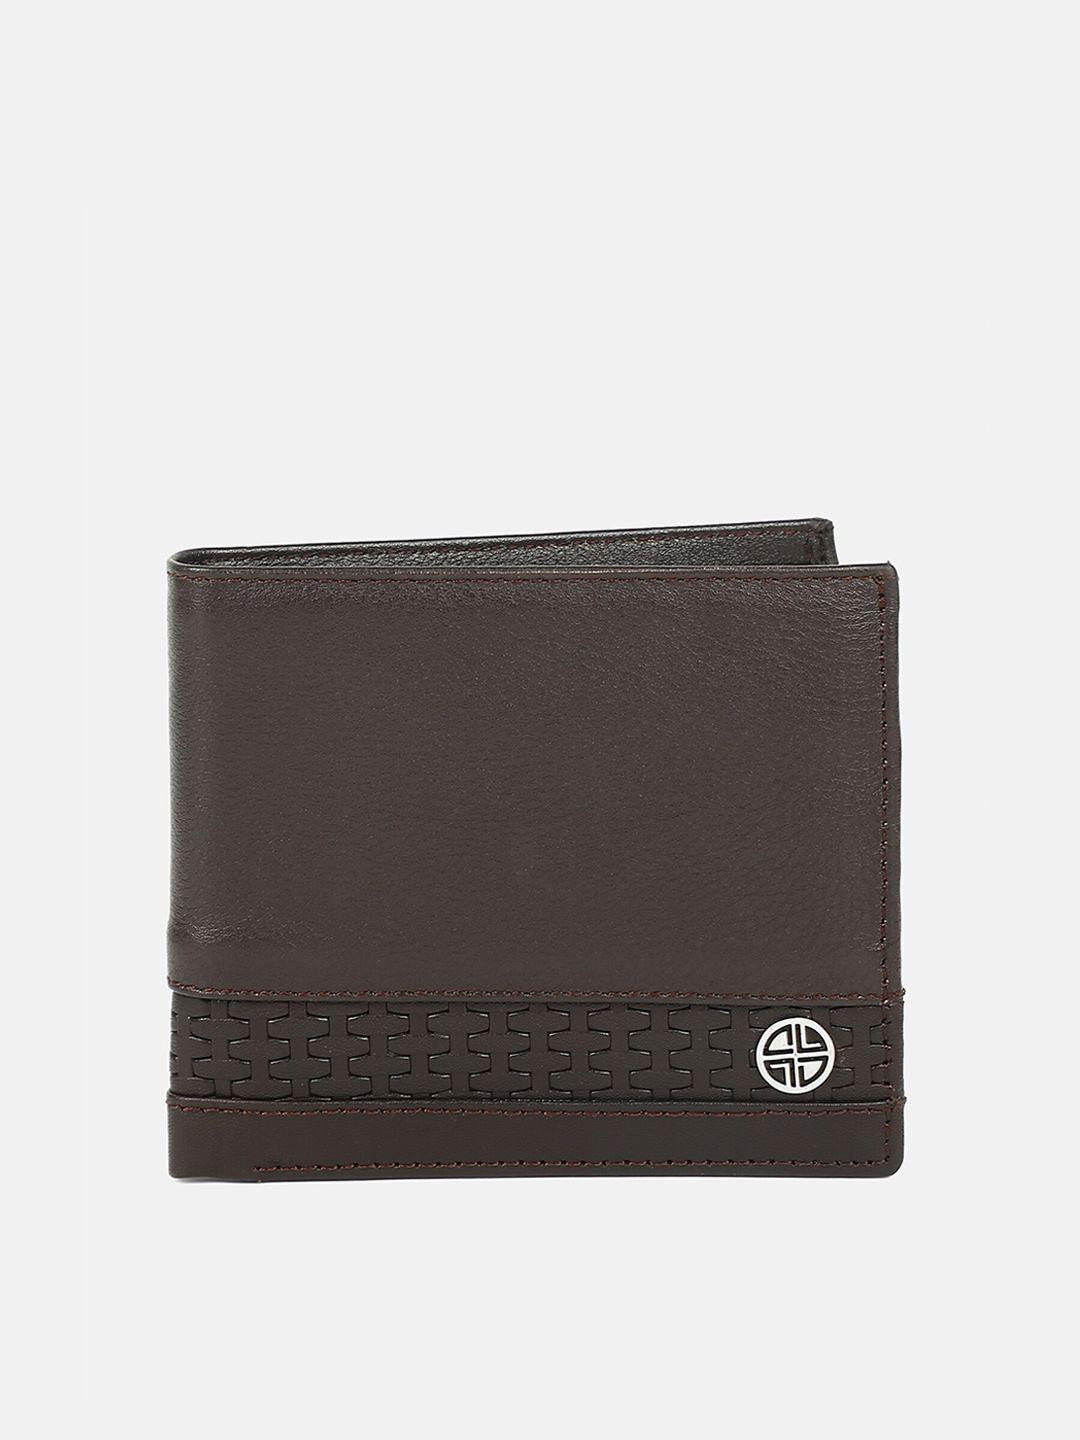 carlton london men brown textured leather two fold wallet